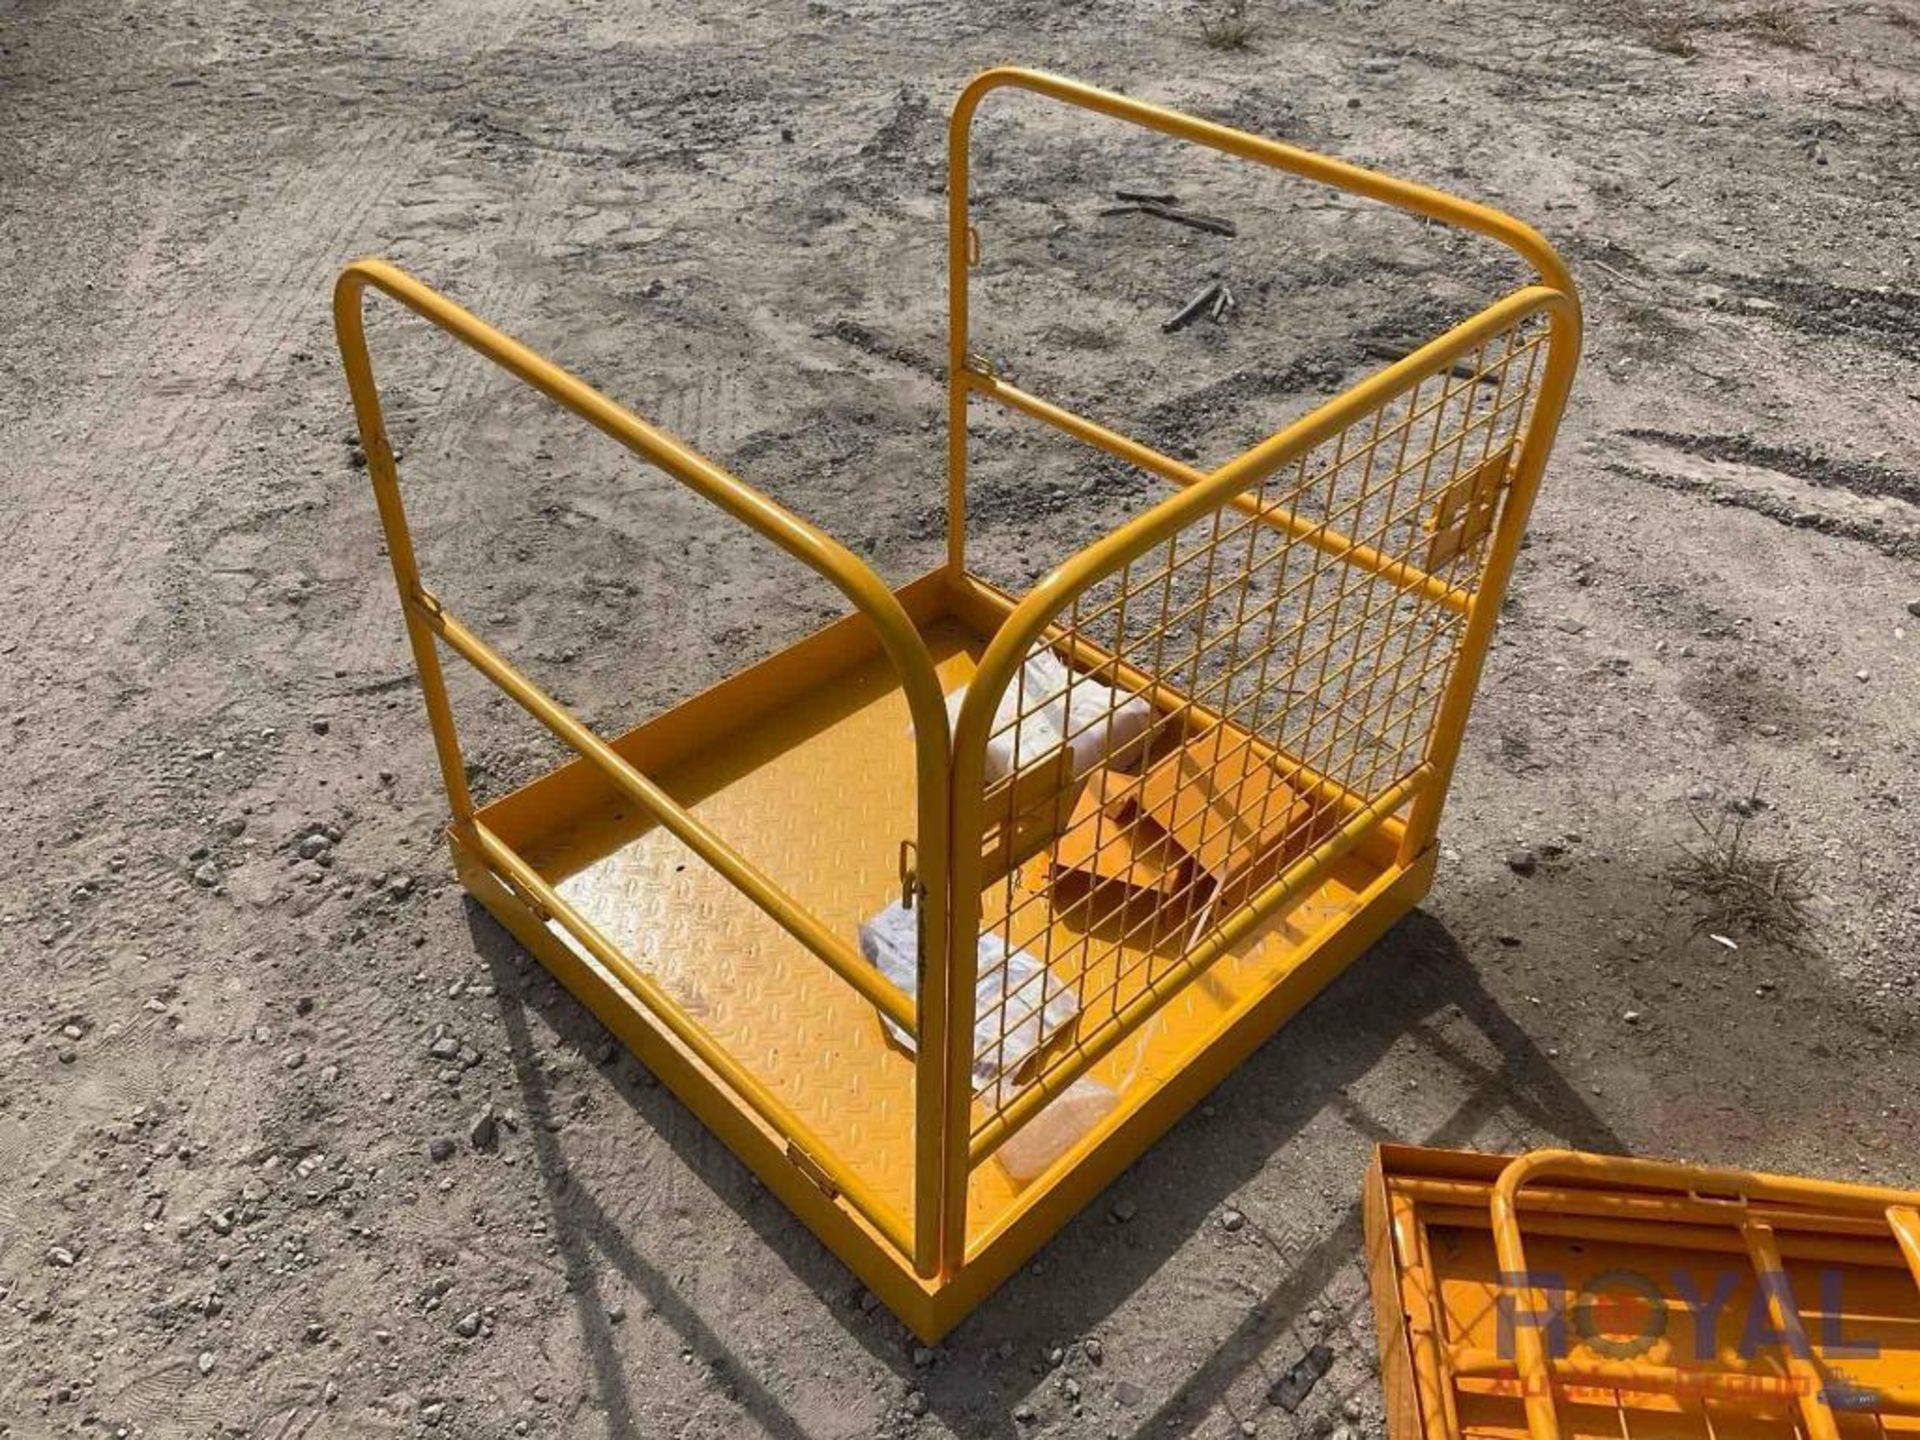 Forklift Collapsible Safety Cage Man Basket - Image 3 of 6